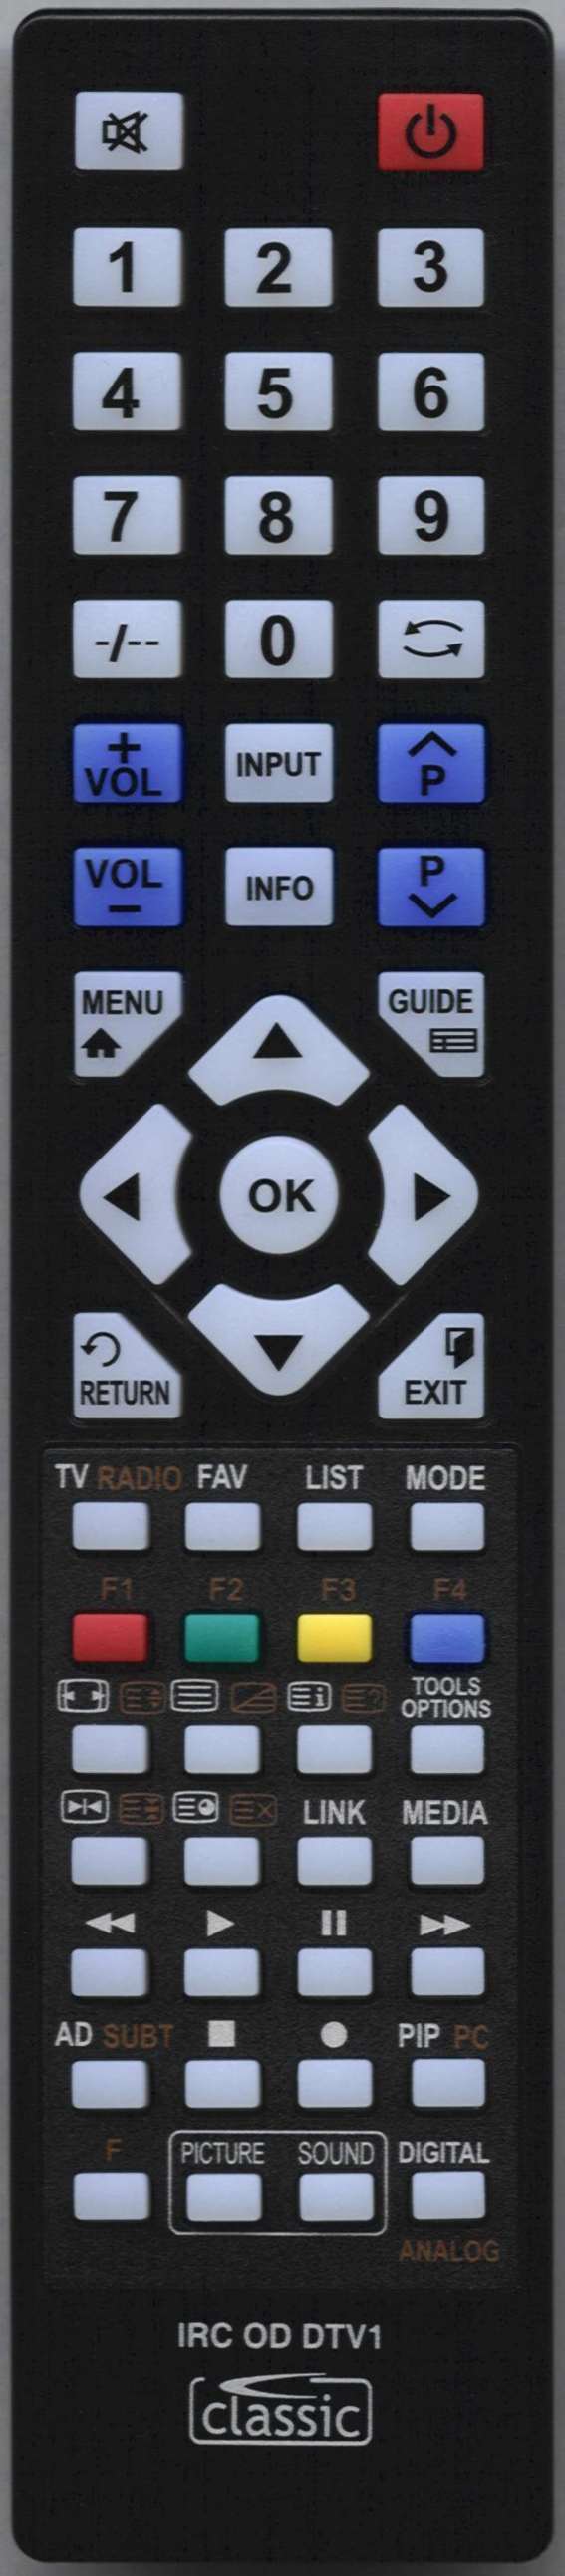 Beko 32416 ND Remote Control